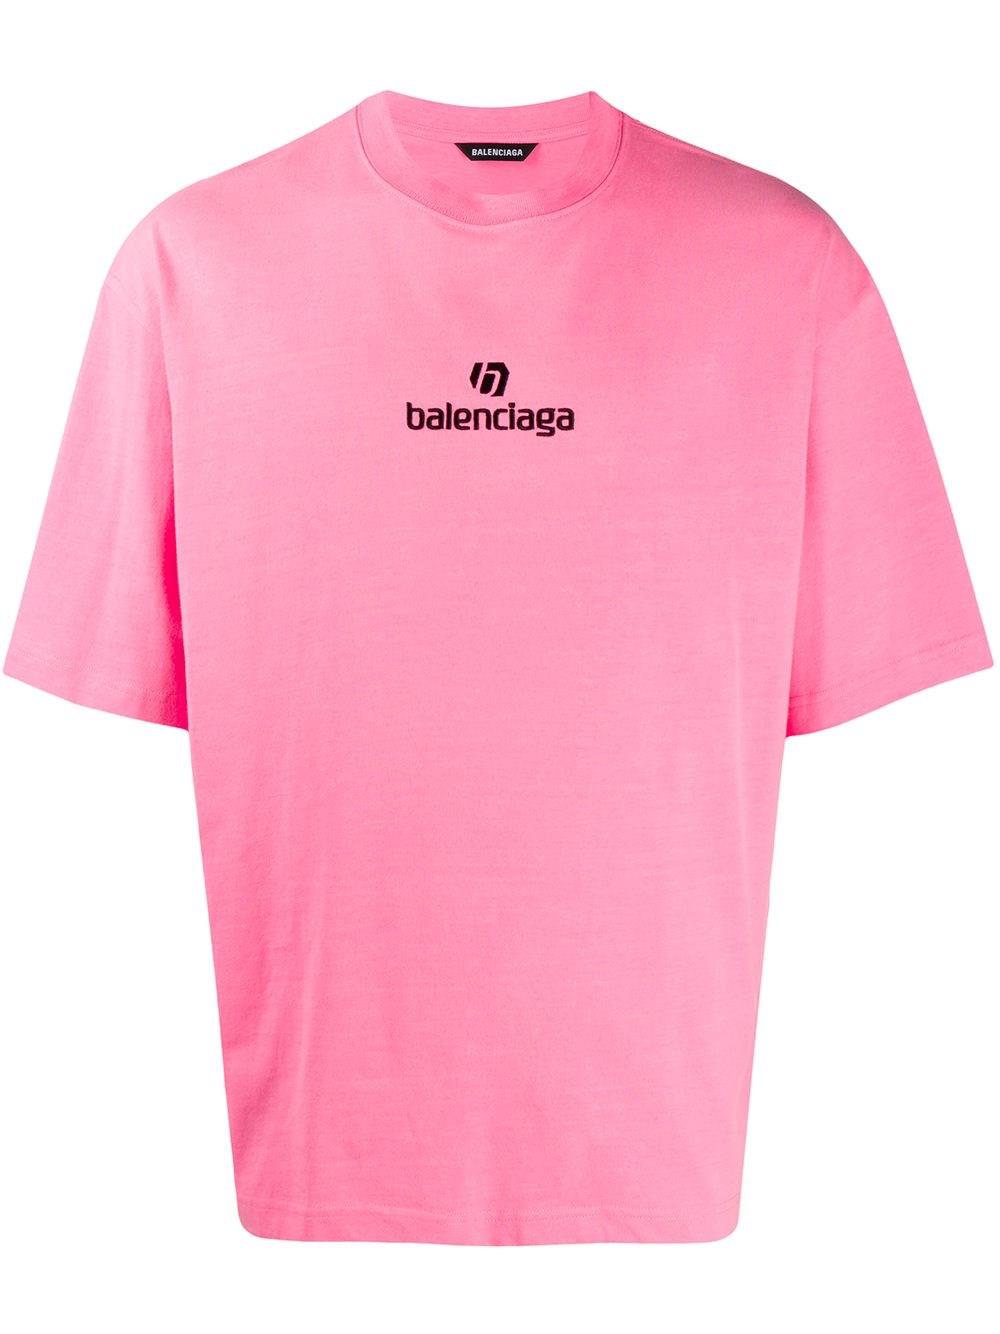 Balenciaga Pink Large Fit Logo TShirt  SSENSE UK